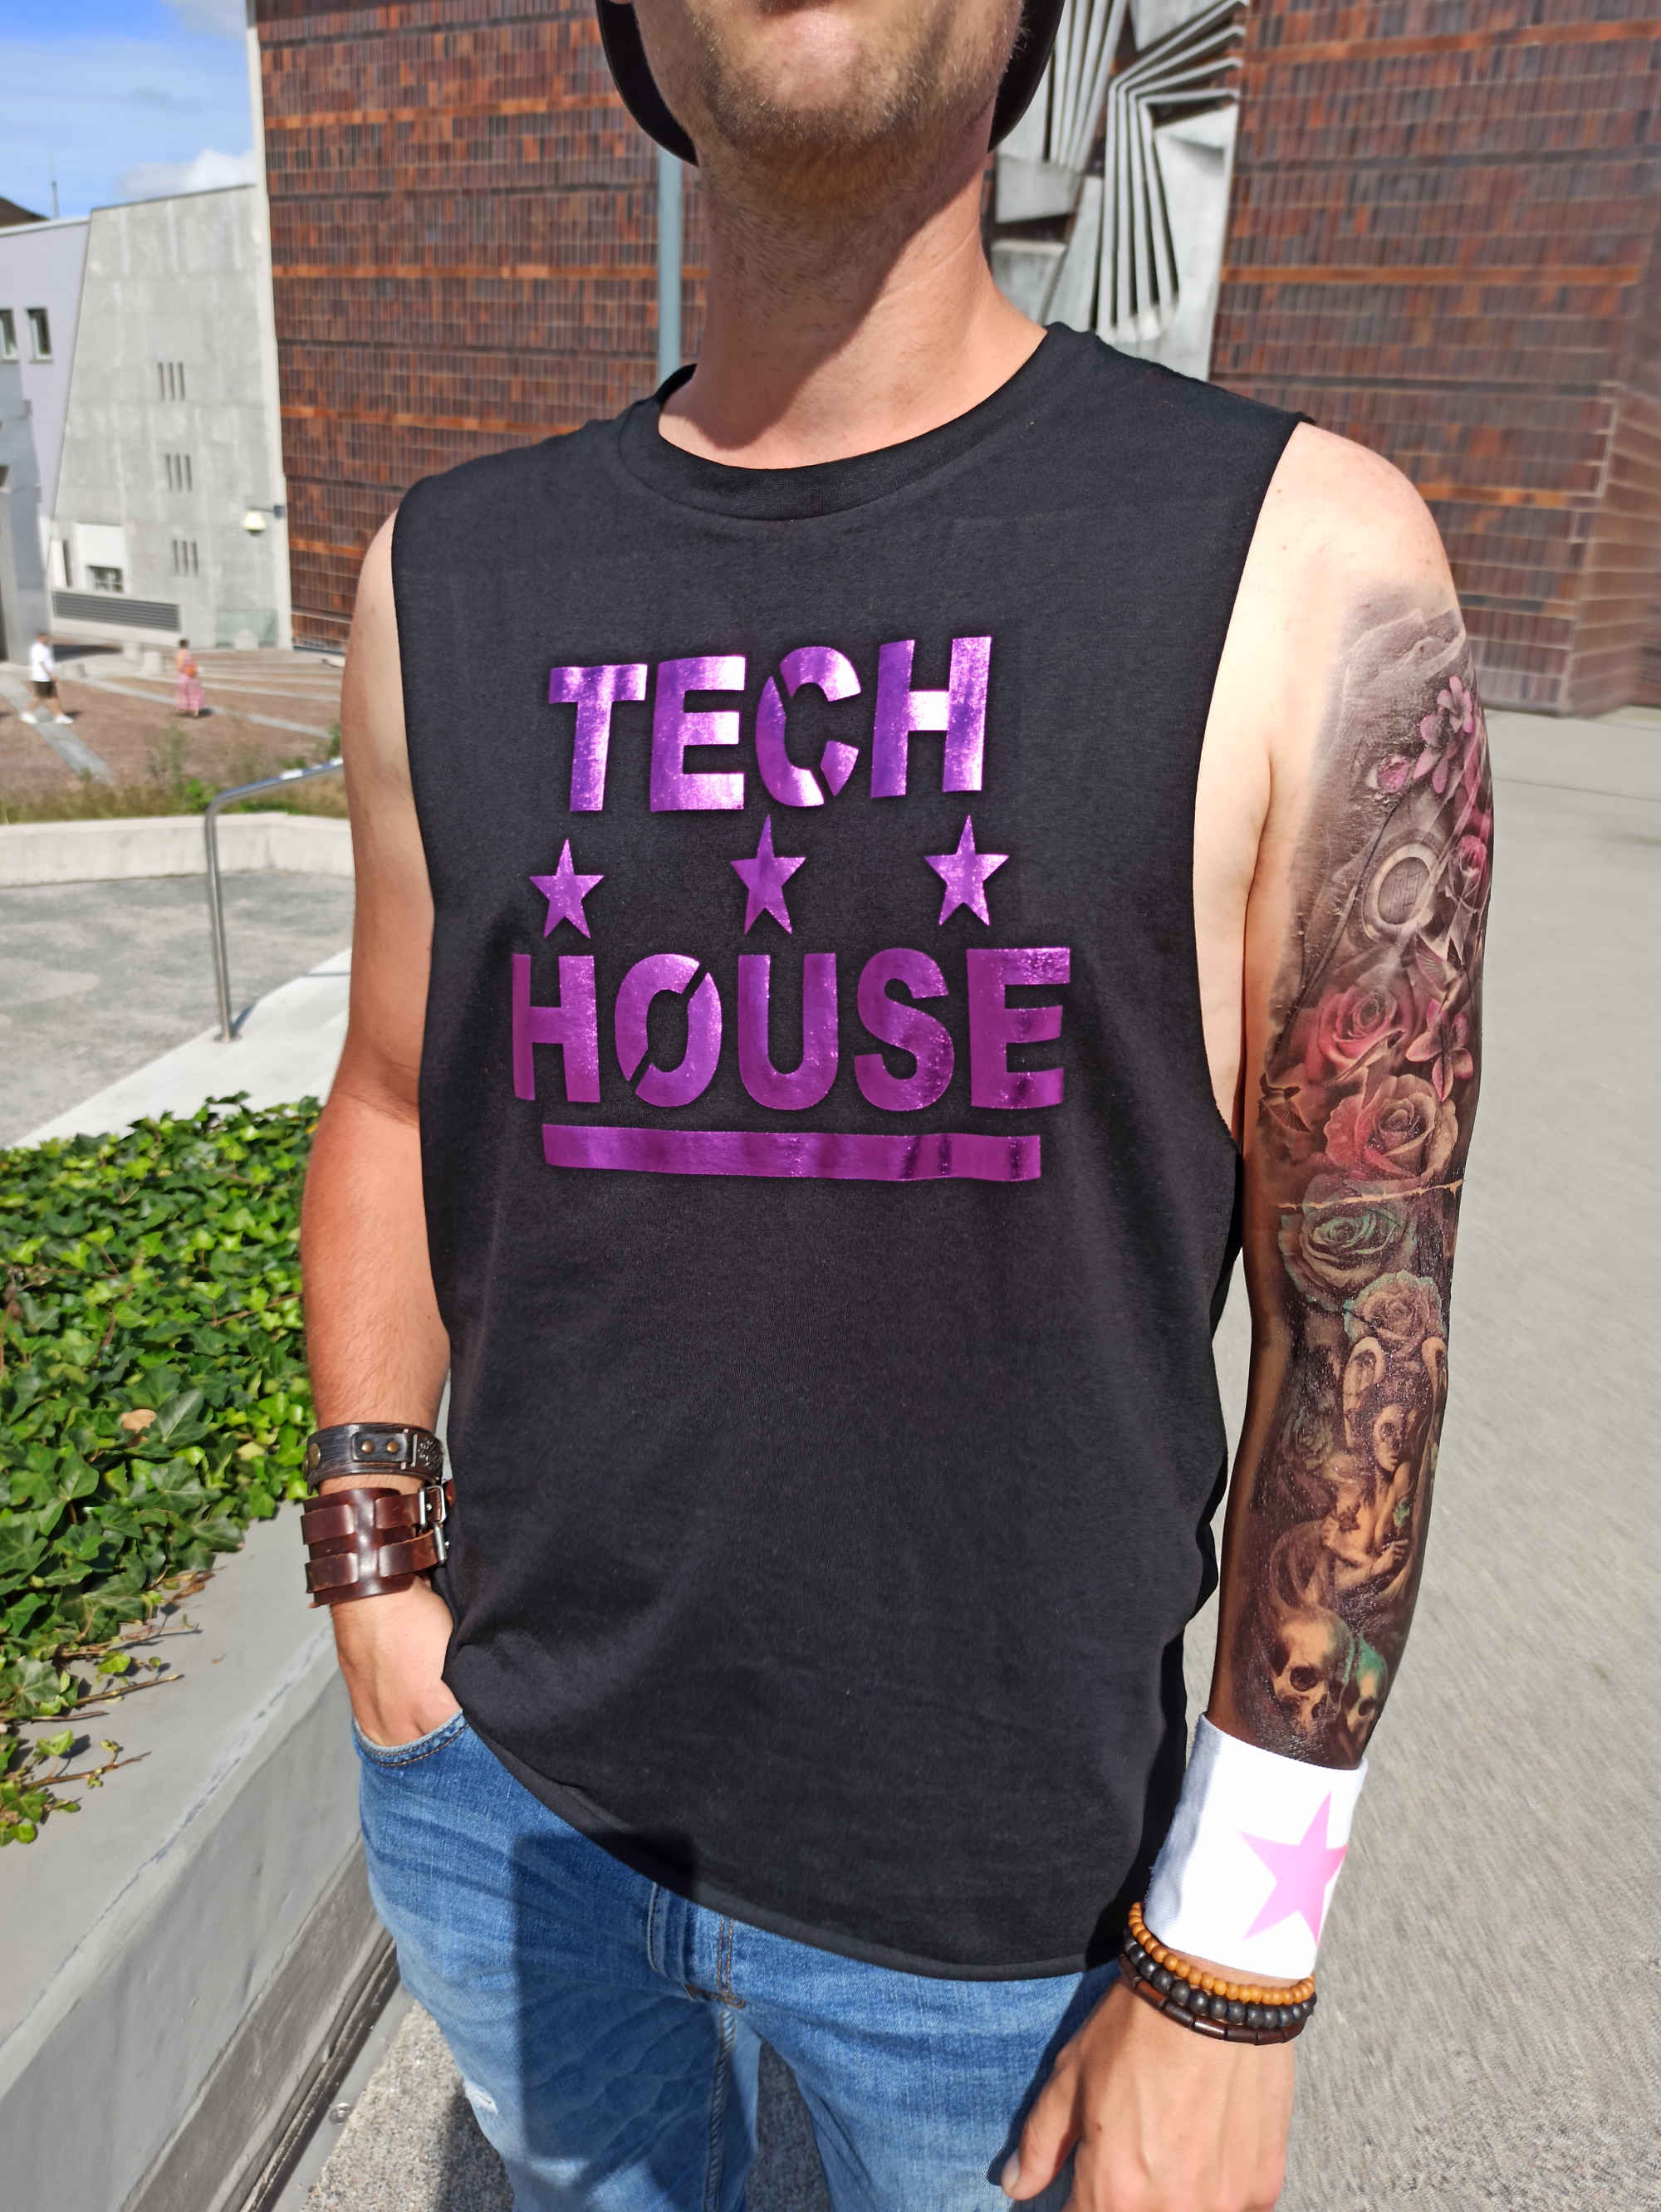 Armhole Vest Tank Top von Tech x House Model " Houser"  im Clubwear House Style Fashion Shop